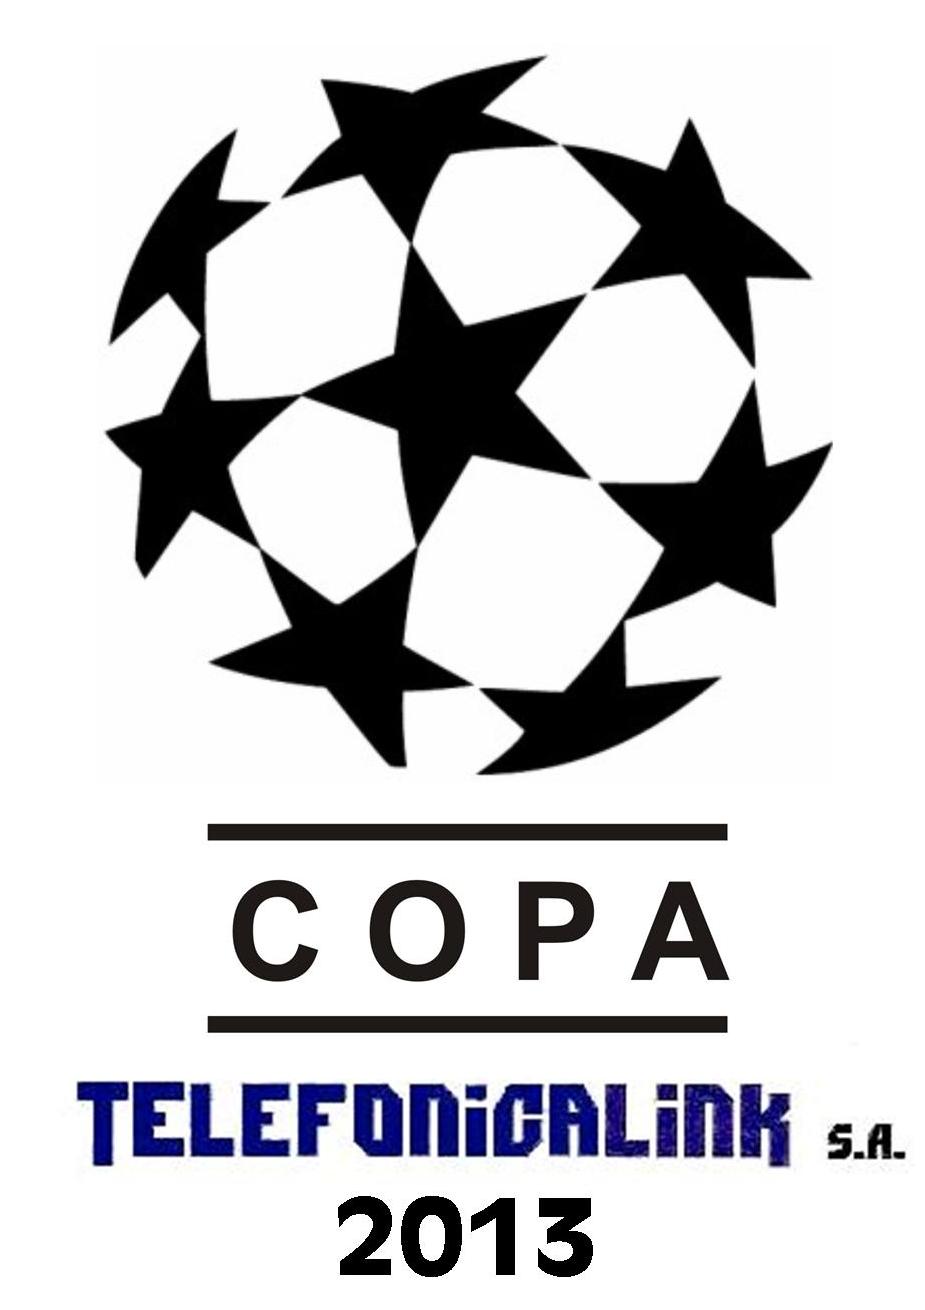 logo de Copa Telefonicalink 2013